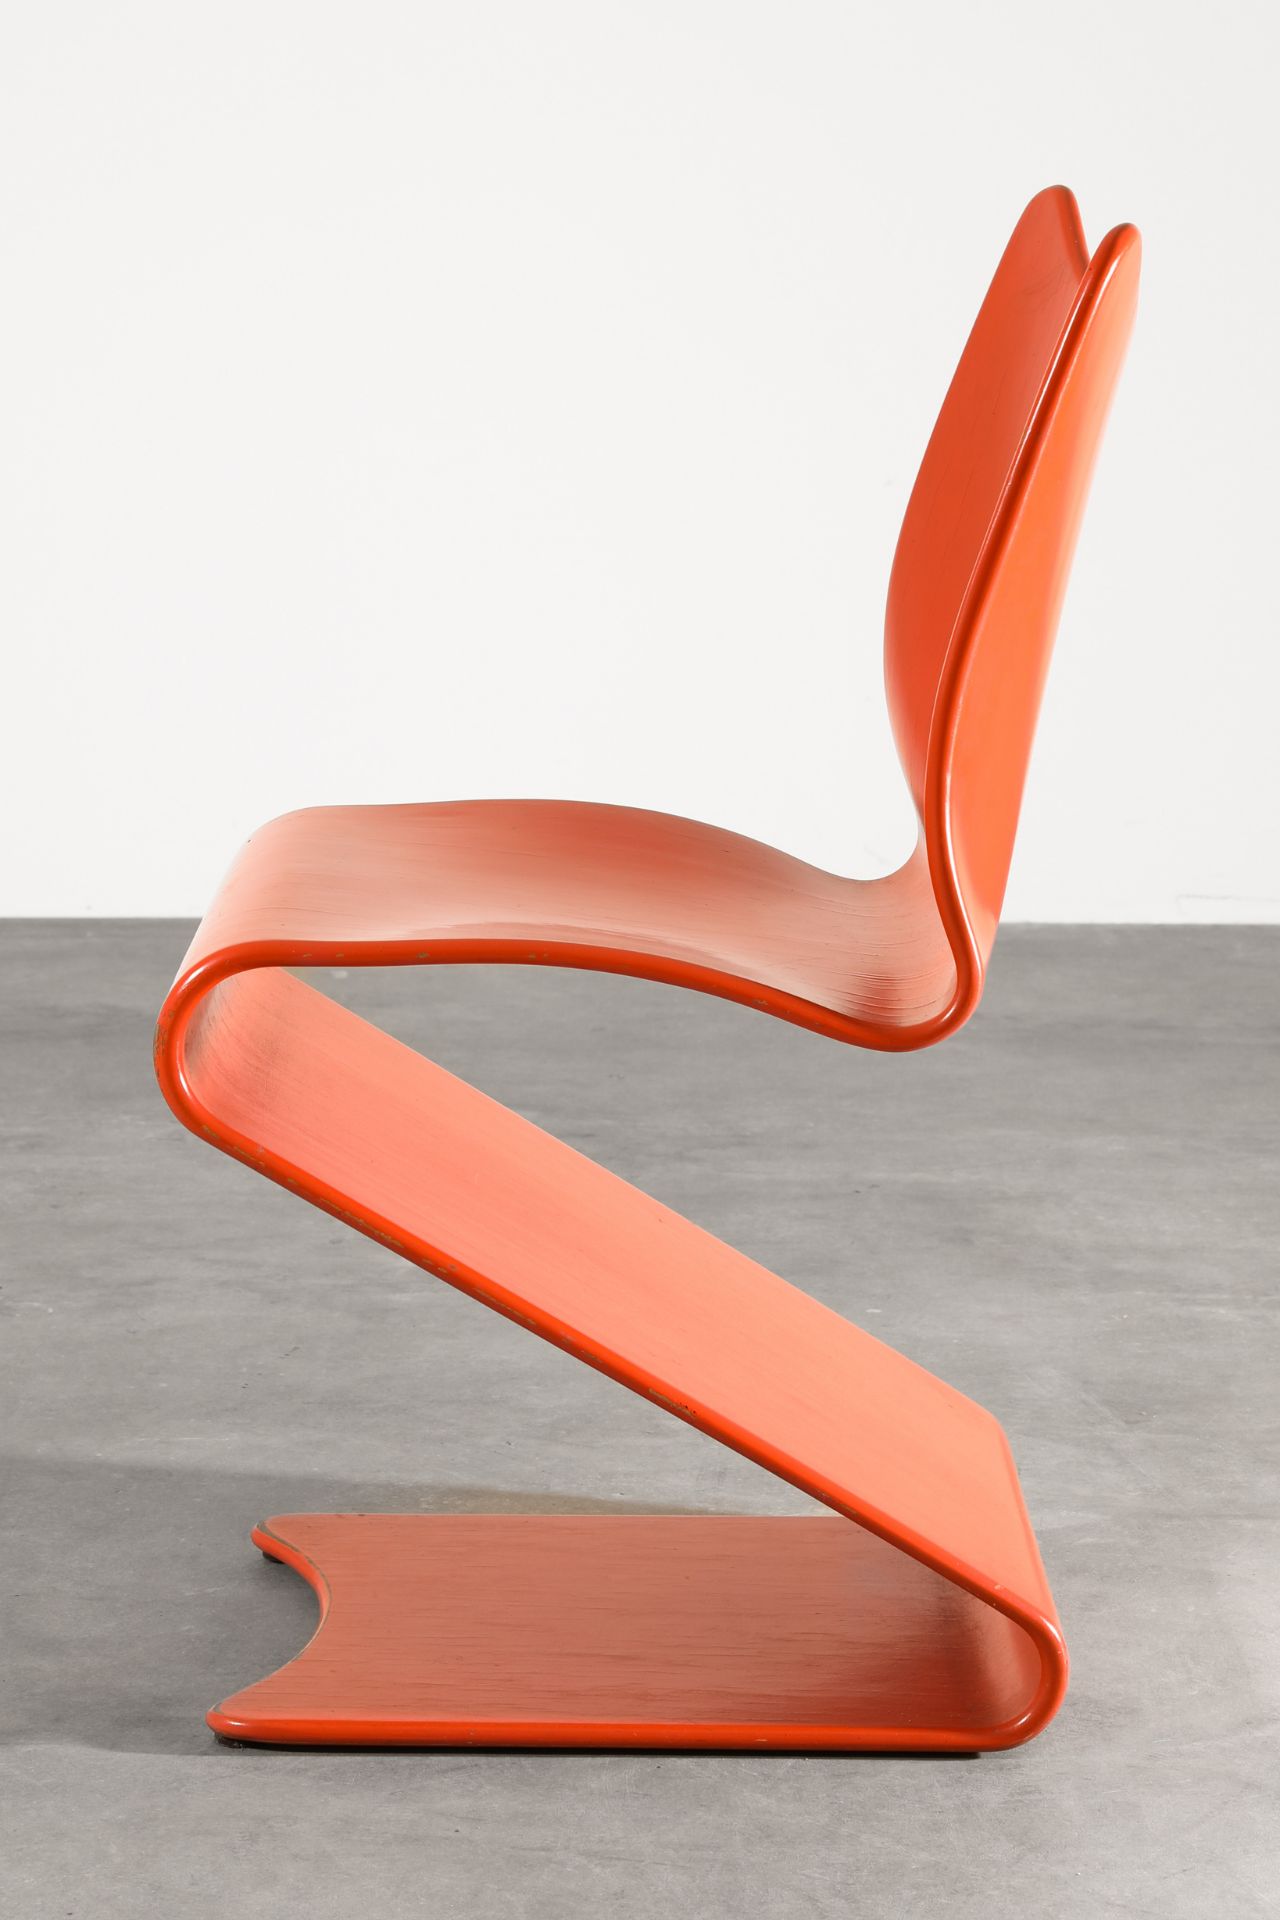 Verner Panton, A. Sommer / Thonet, Plywood Chair, model 275 S-Stuhl - Image 4 of 6